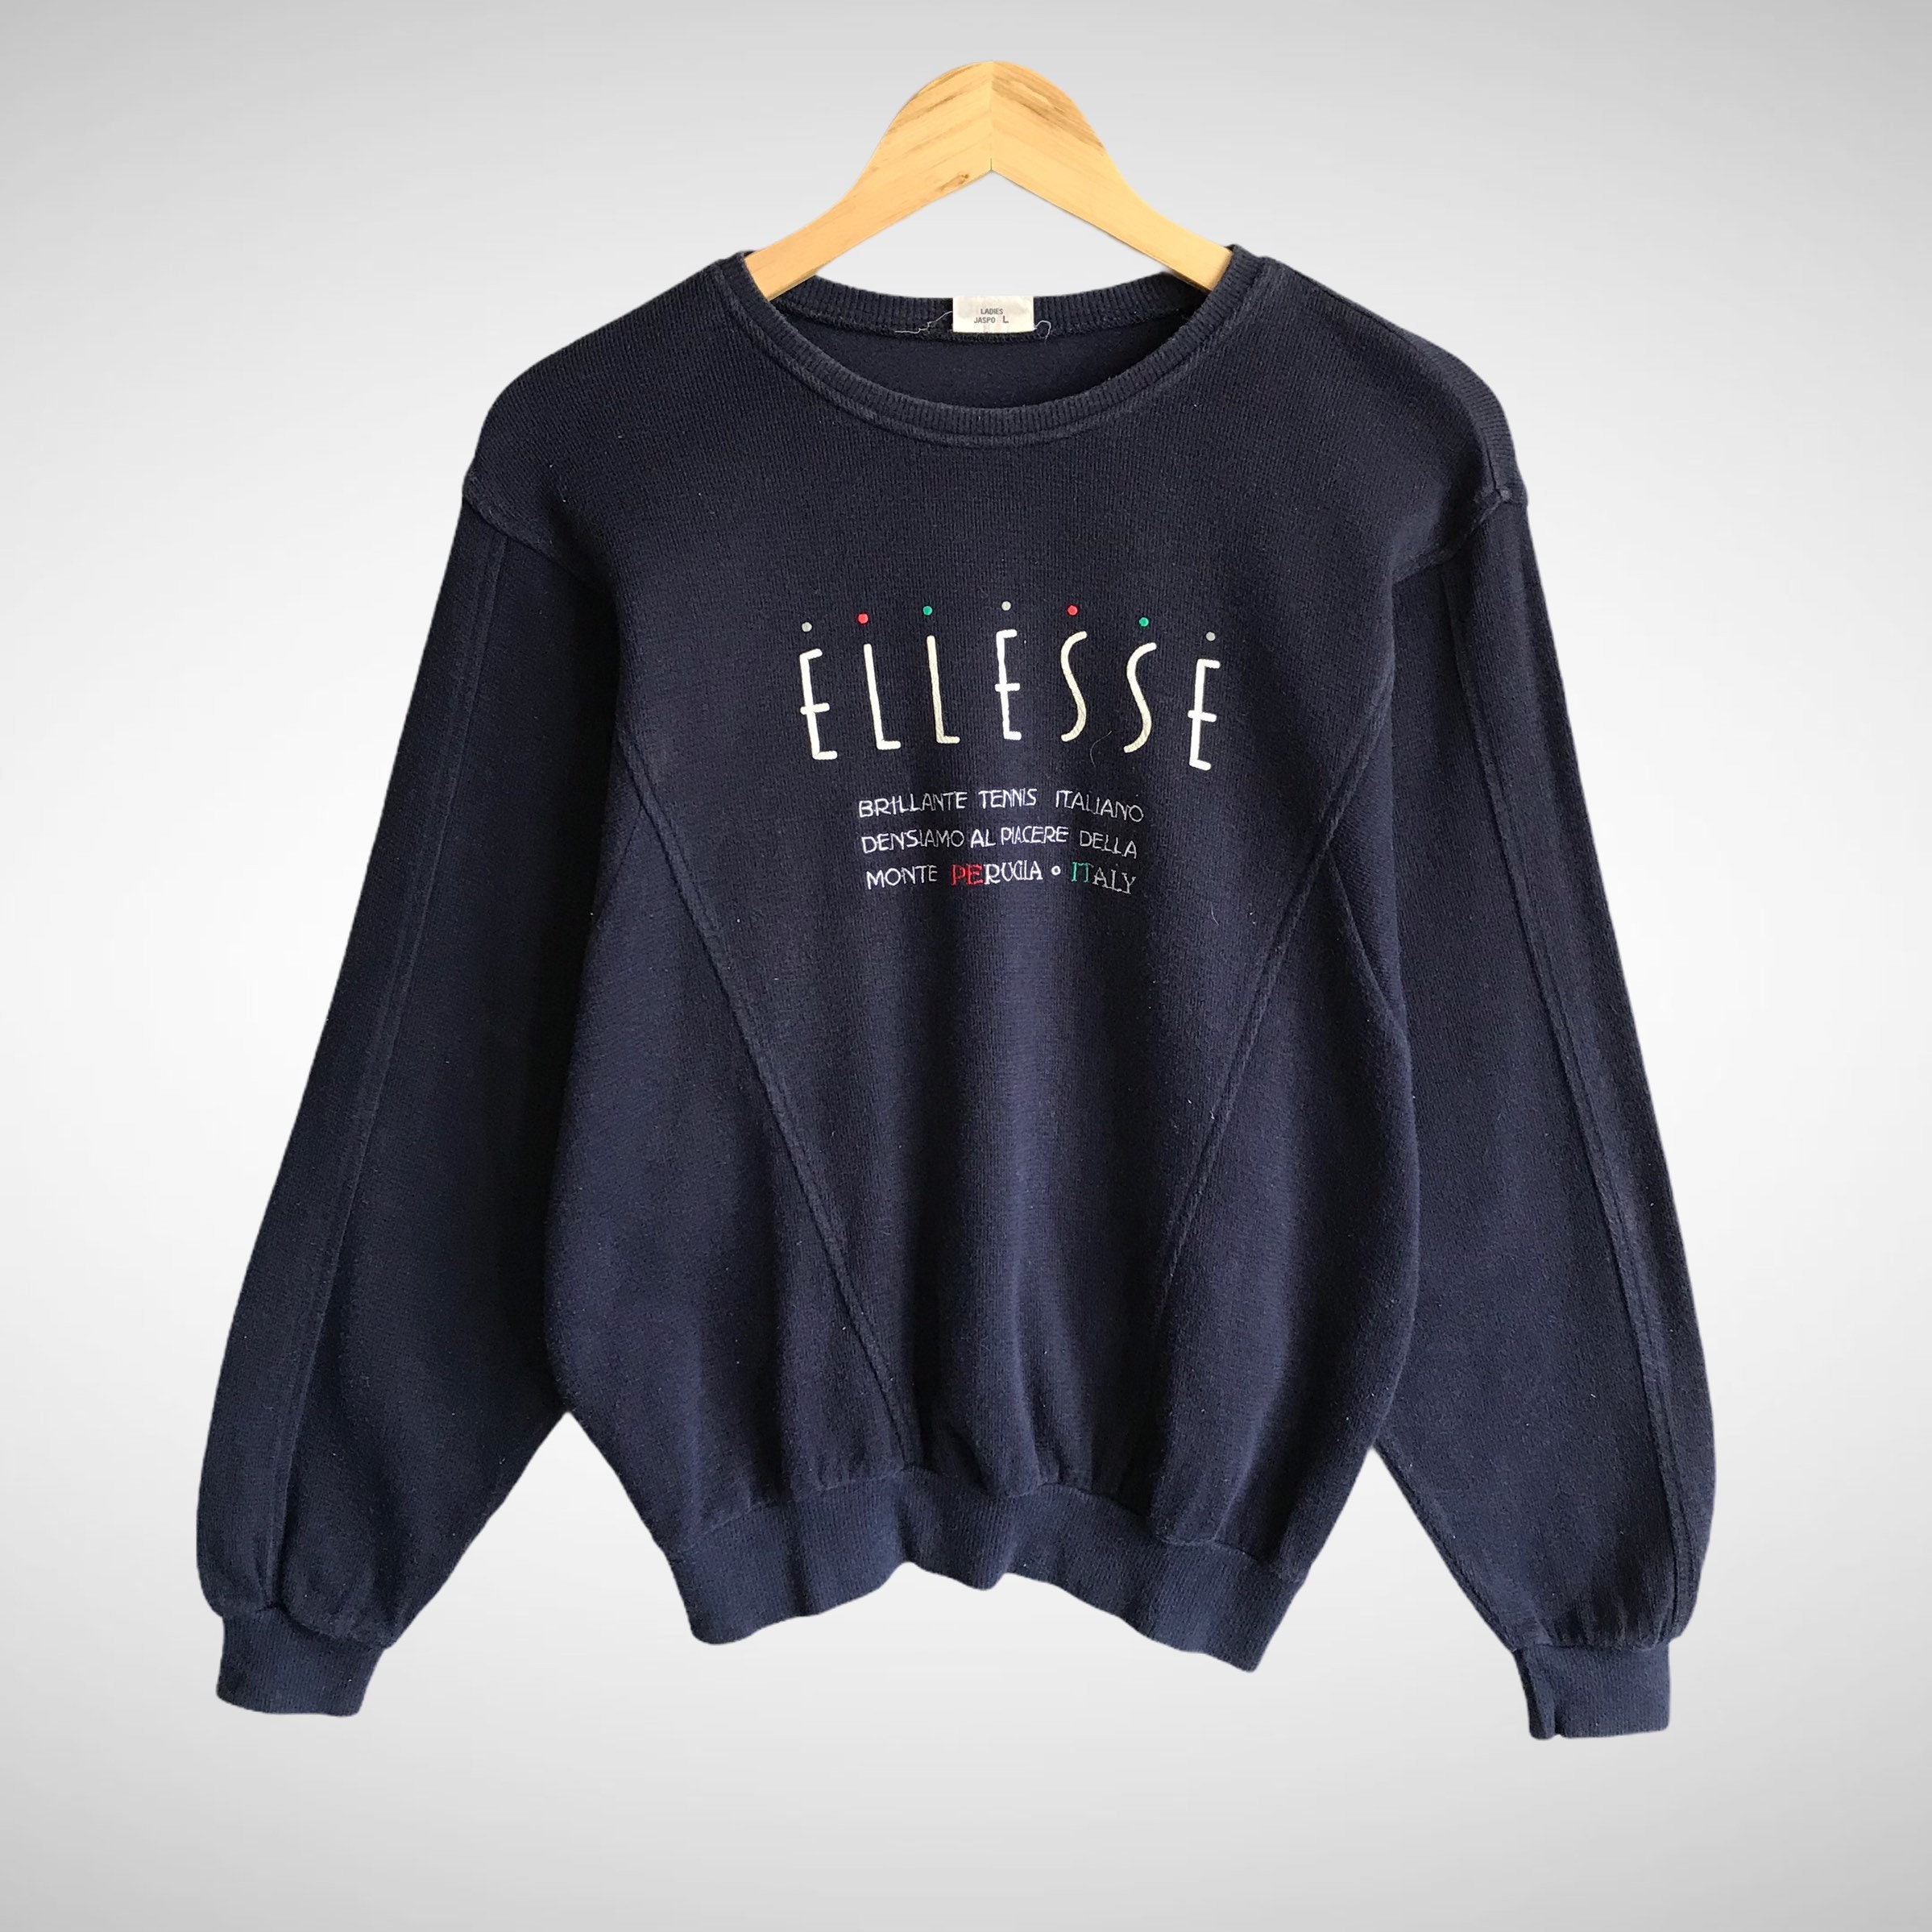 Ellesse Sweater - Etsy | Sweatshirts